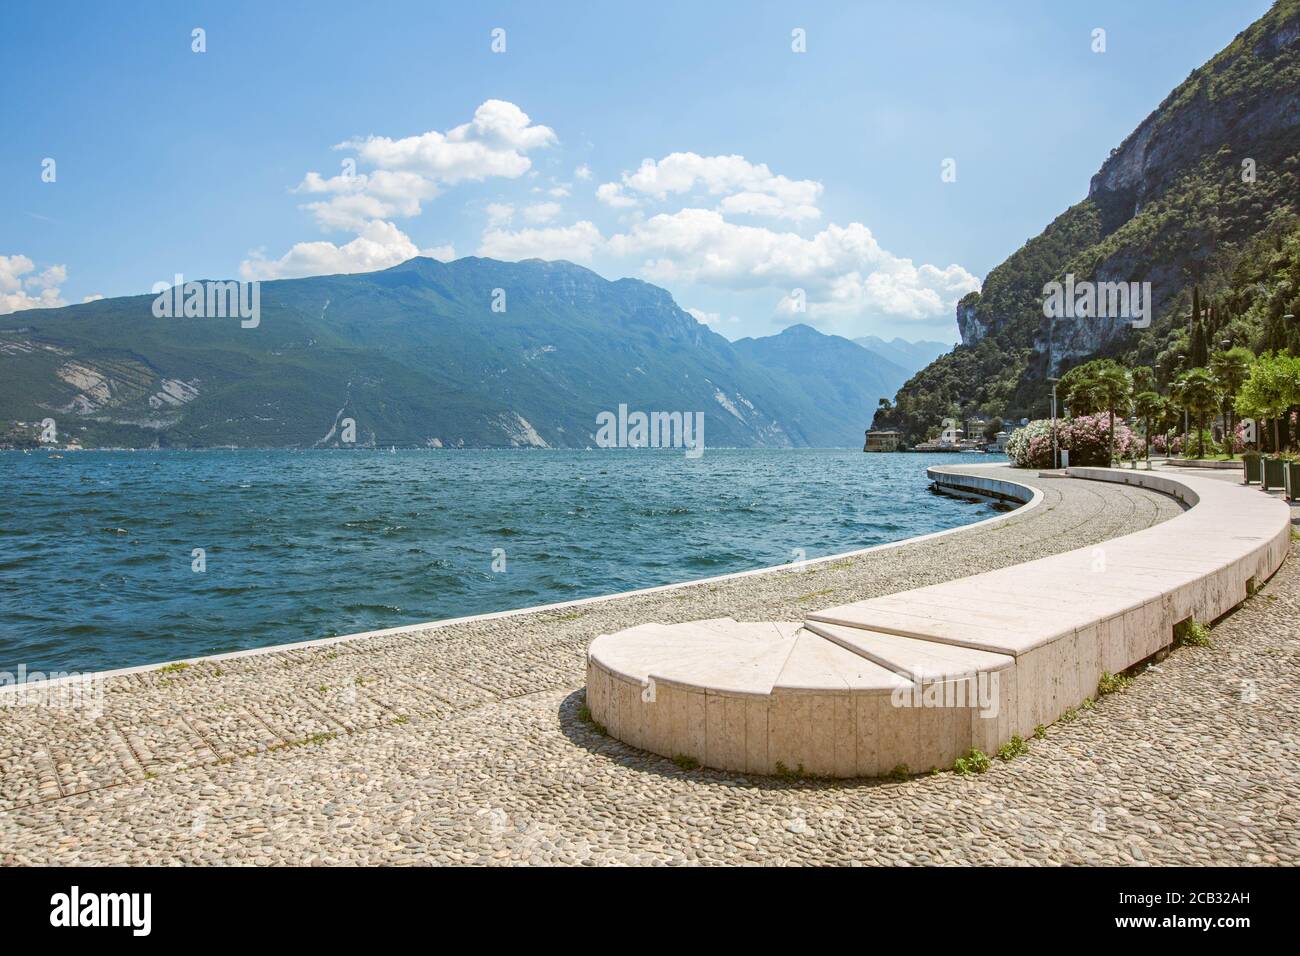 Promenade of lake Garda,  Italy, stock photo with no people Stock Photo